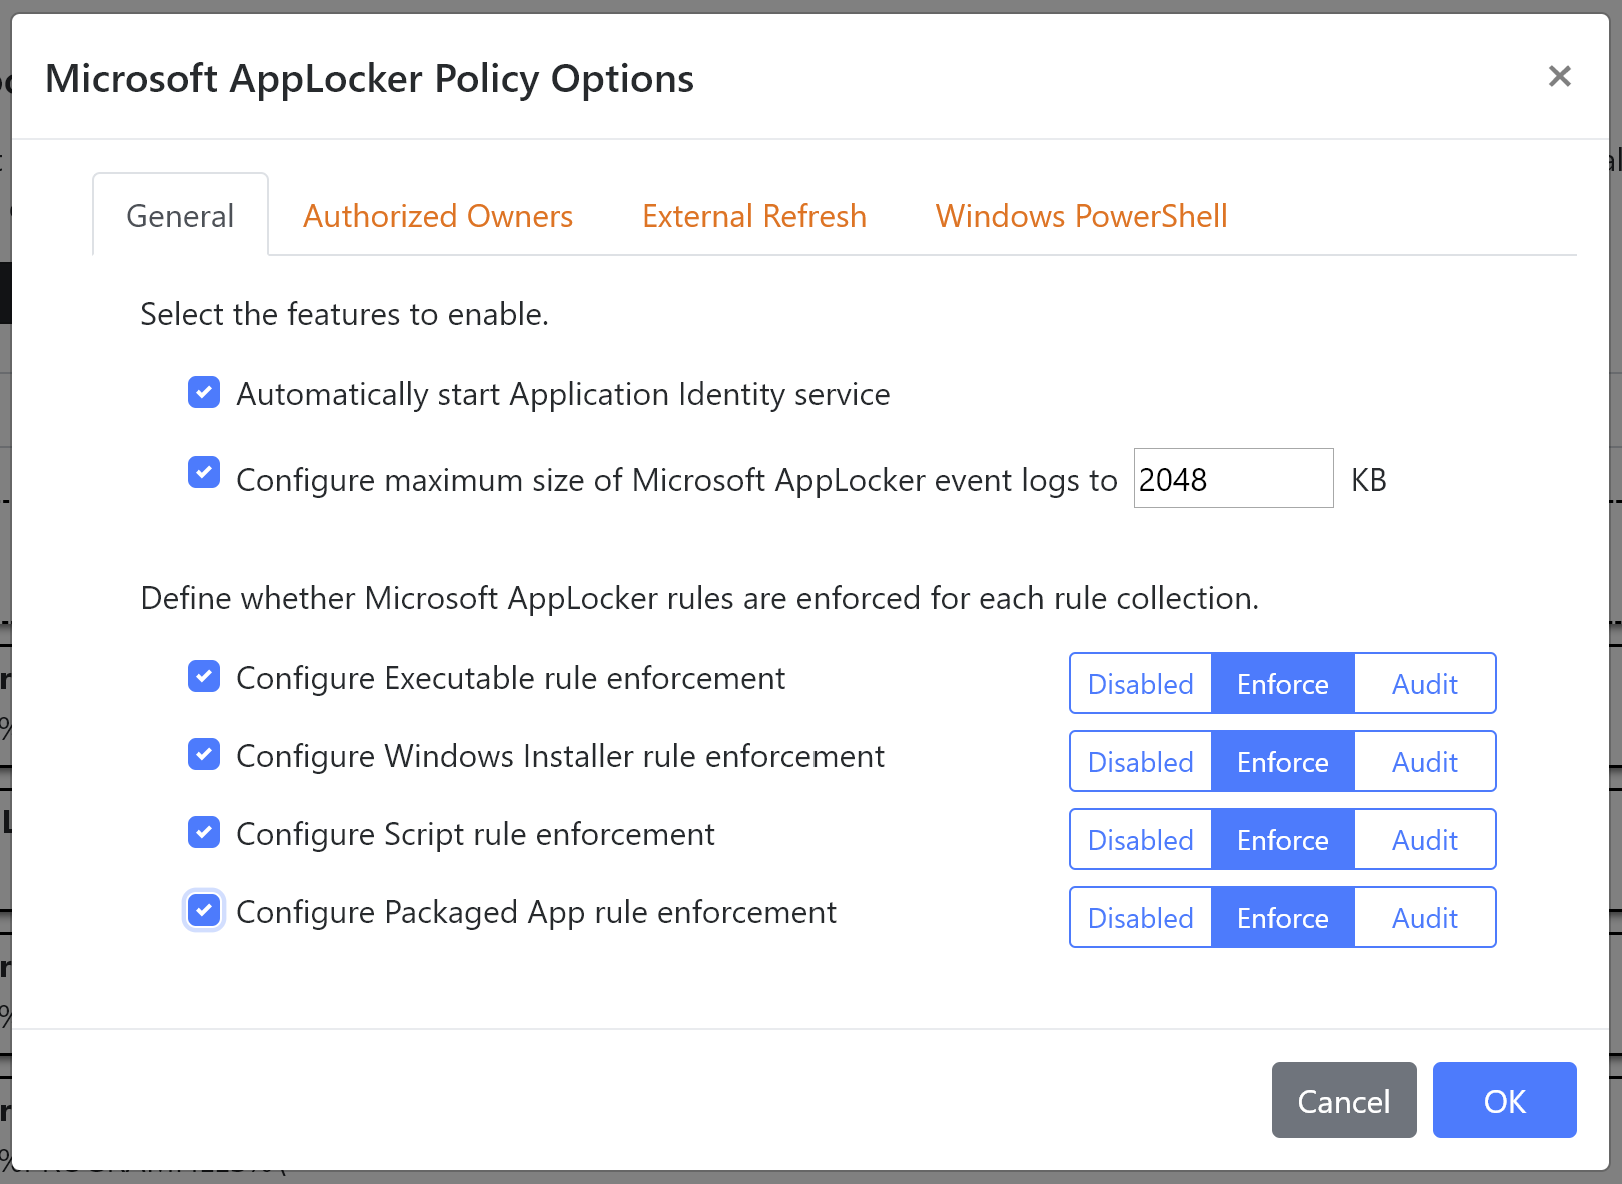 The new Microsoft AppLocker Policy Options